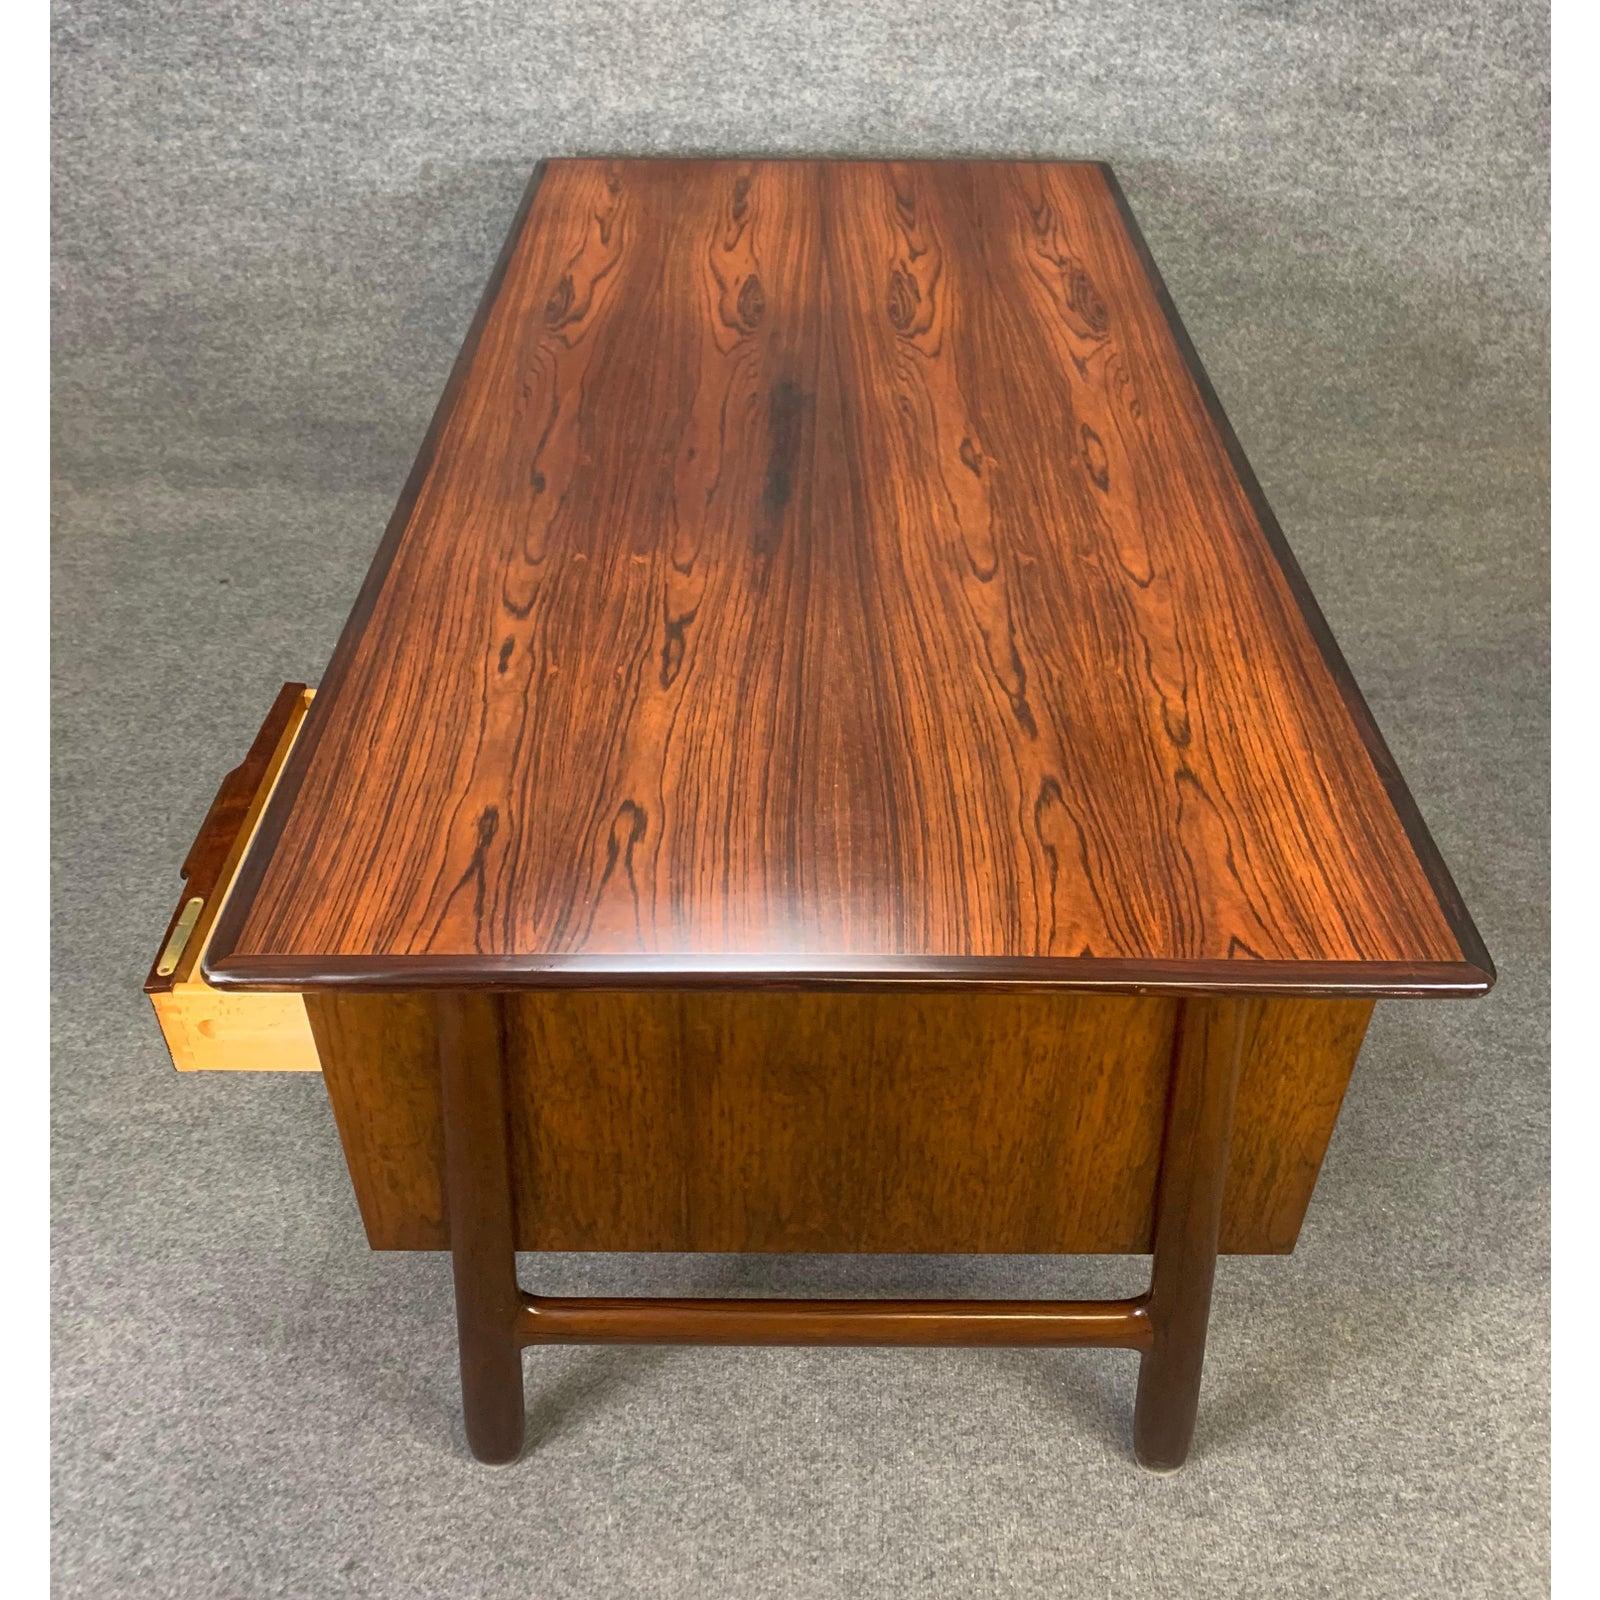 Vintage Danish Midcentury Rosewood Desk Model 75 by Gunni Oman for Omann Jun 6